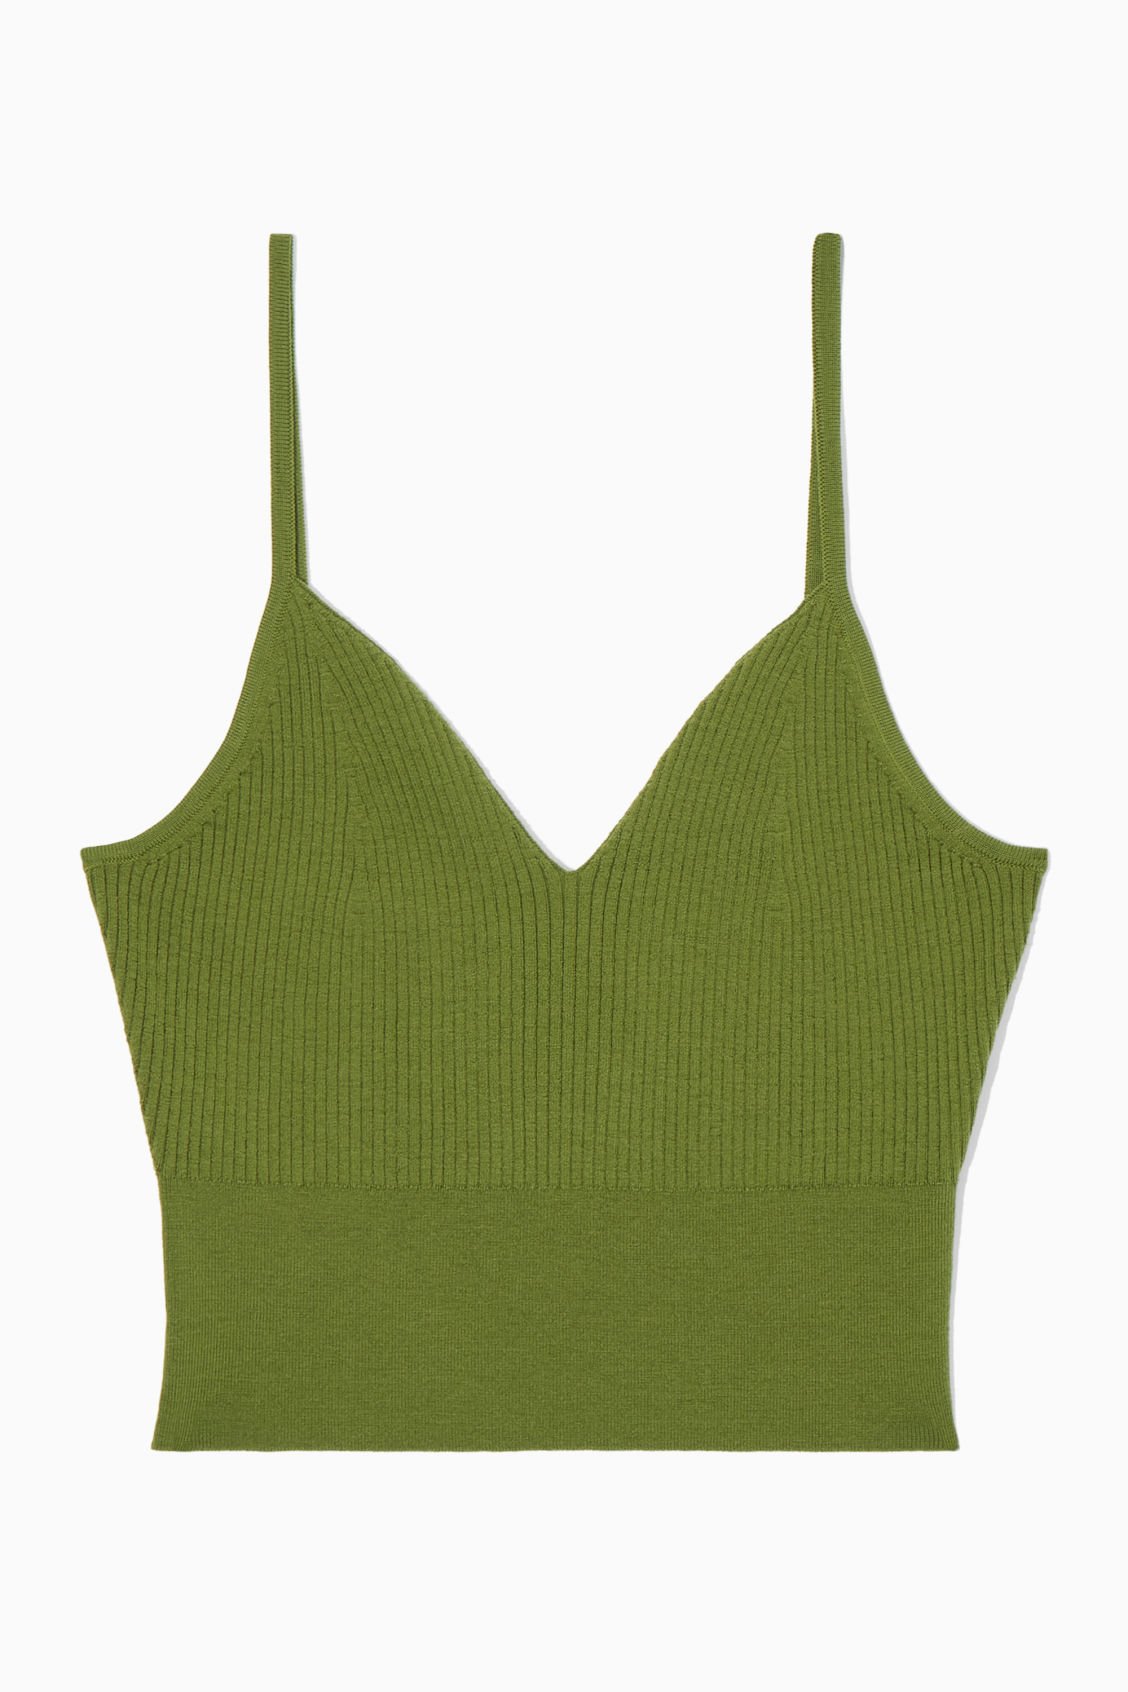 COS Ribbed-Knit Merino Wool Bralette in DARK GREEN